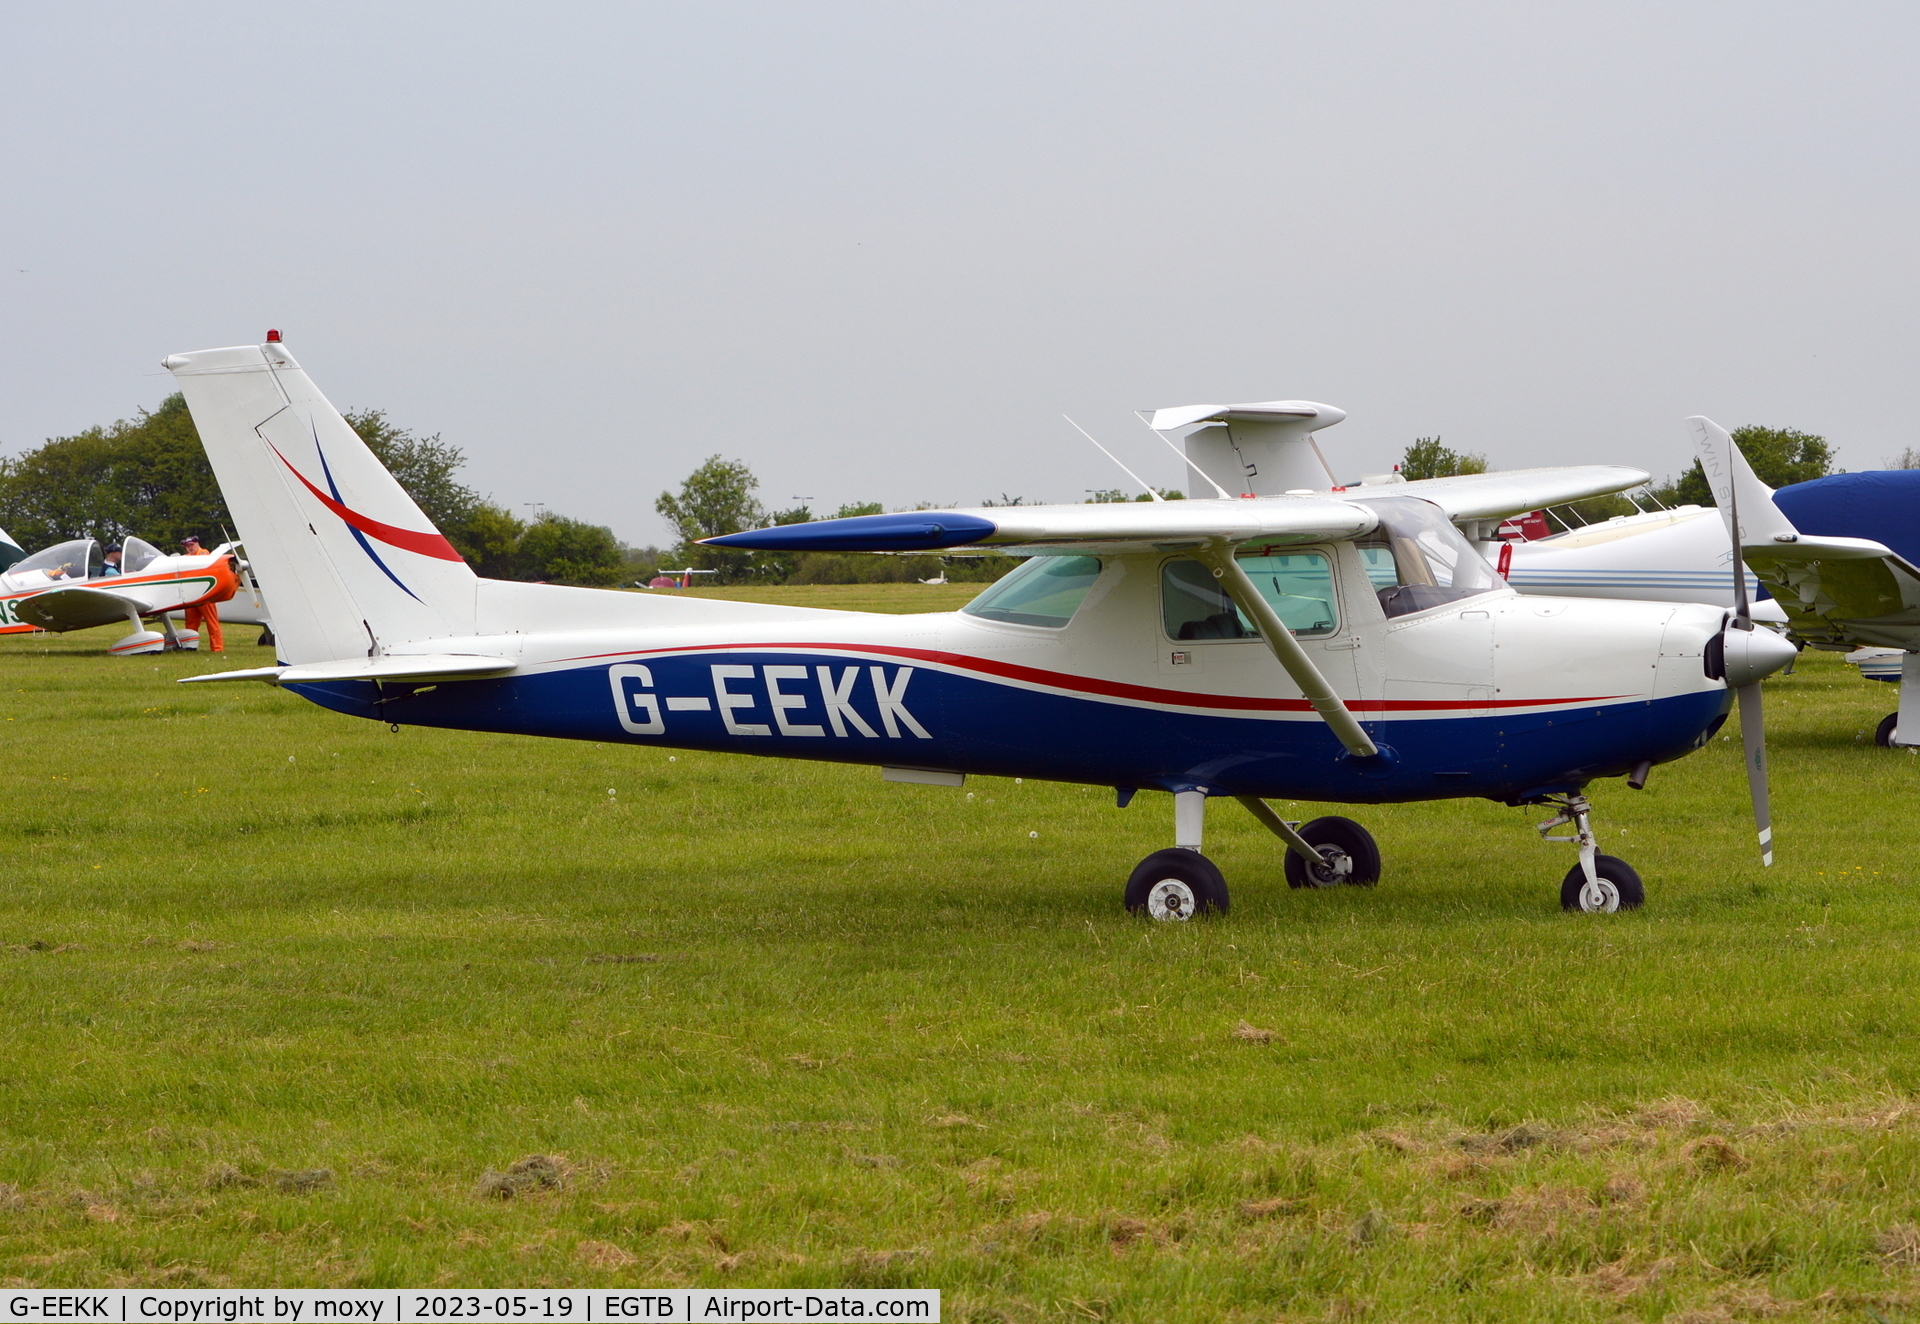 G-EEKK, 1982 Cessna 152 C/N 152-85621, Cessna 152 at Wycombe Air Park. Ex EI-CRU. Updated colour scheme.